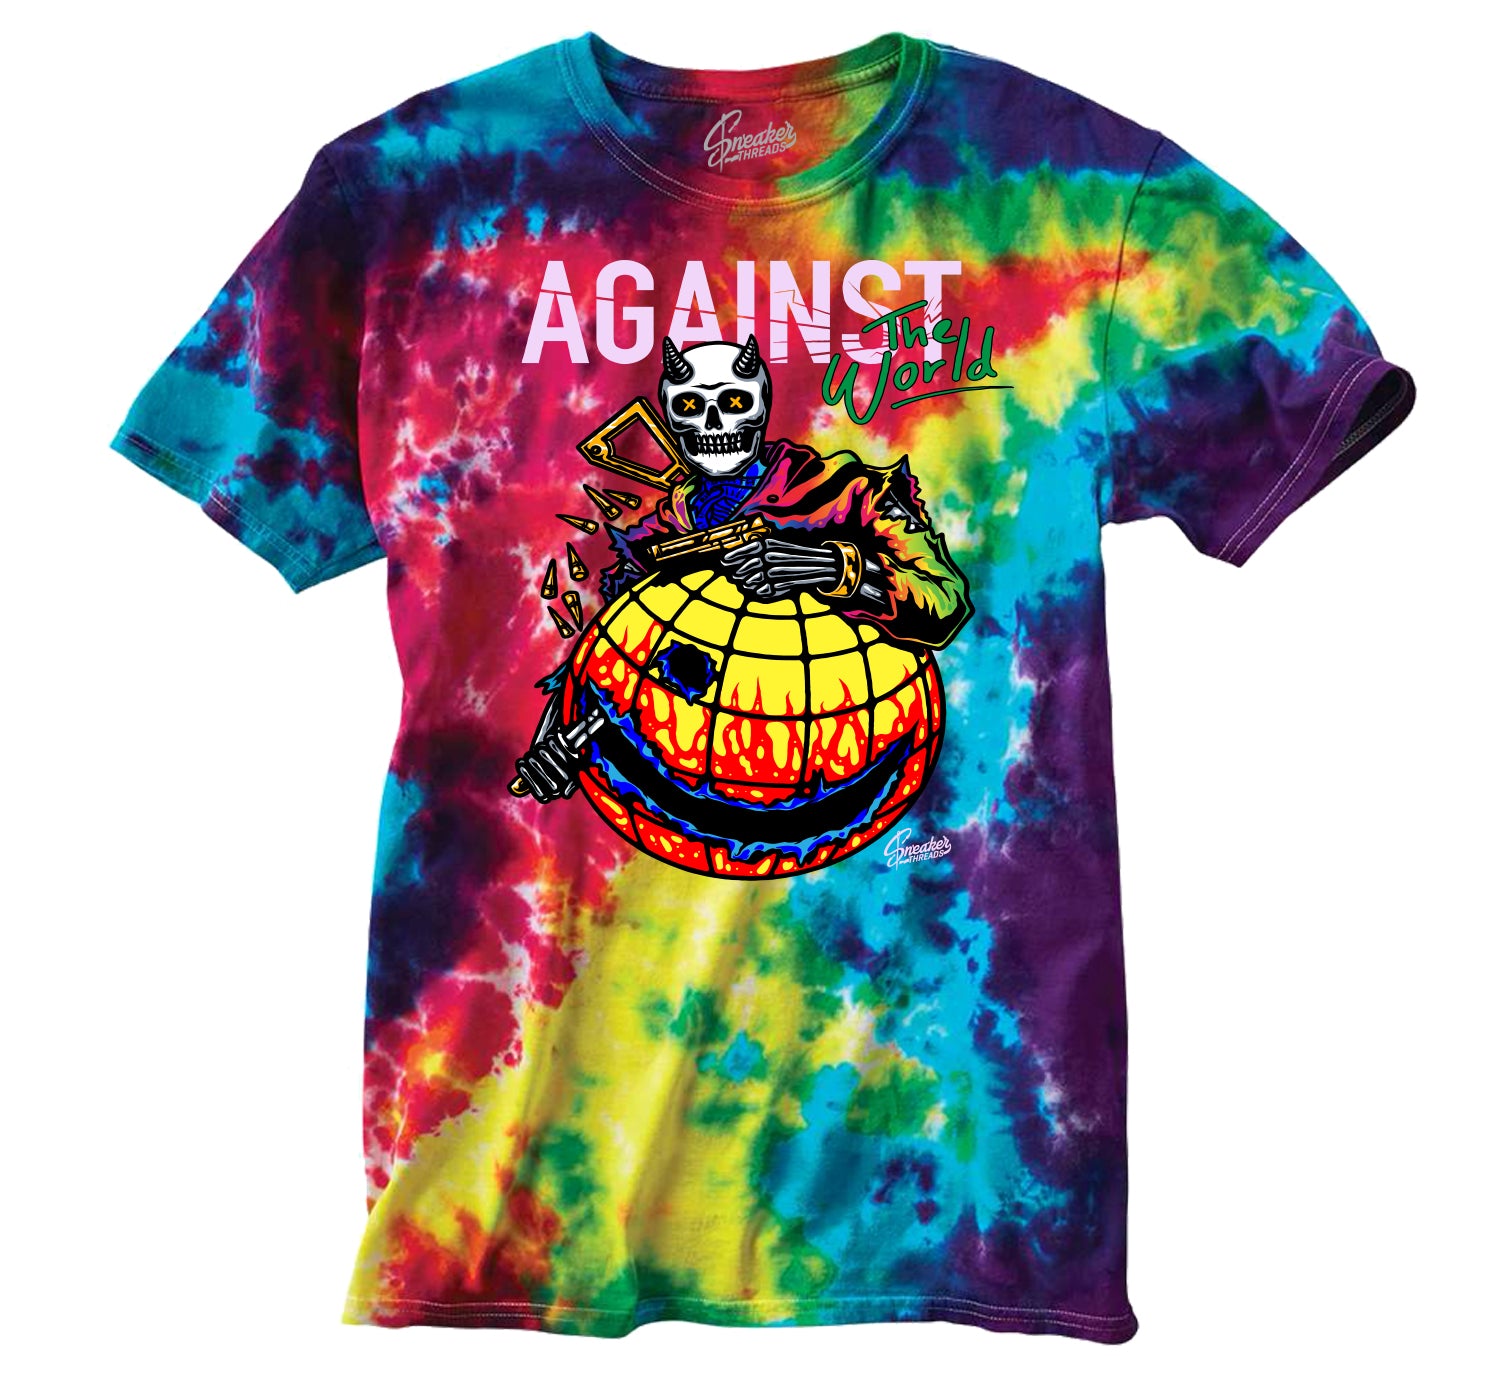 Retro 1 Balvin Shirt -  Against The World - Tie Dye